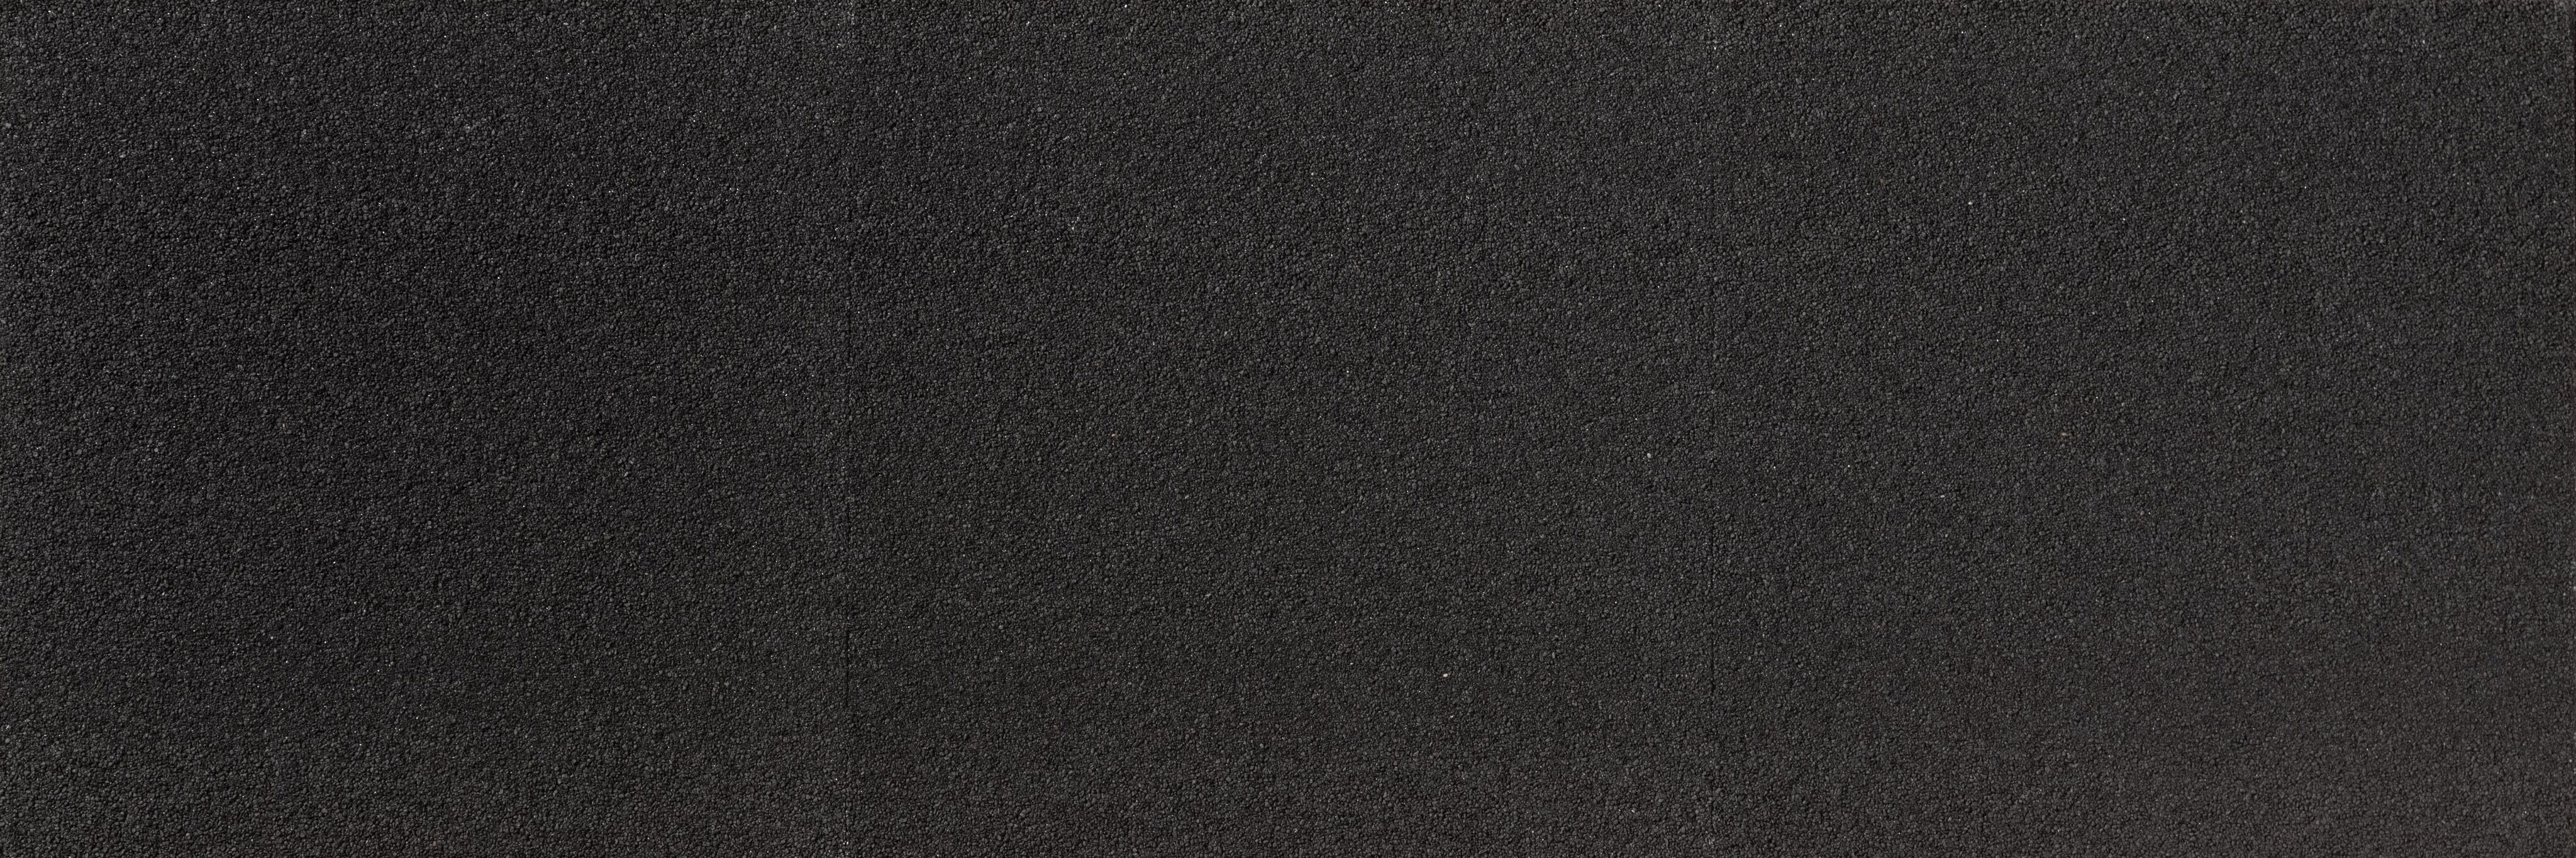 Конек-карниз Quiet tile Brick 16.8/20м.п, чёрный